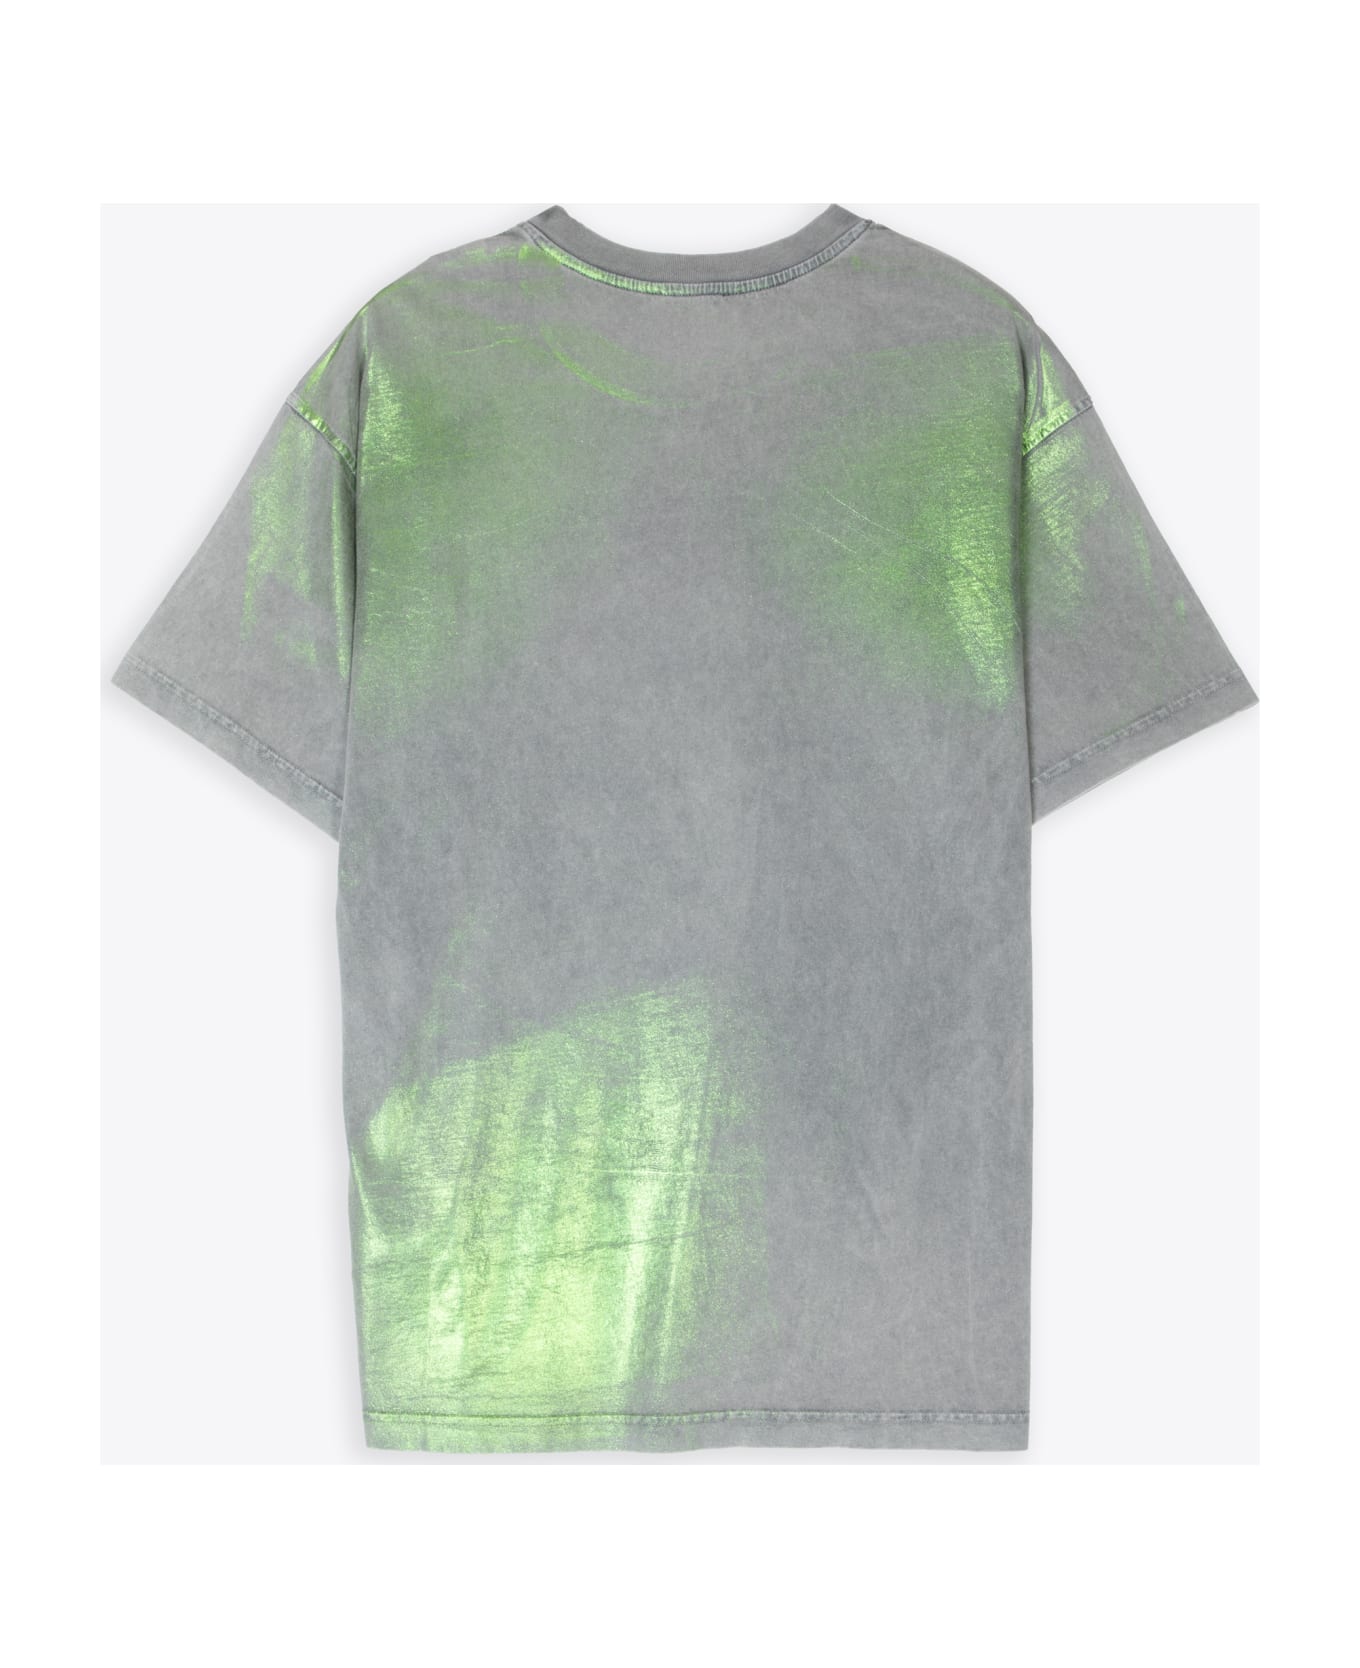 Diesel T-buxt Grey viscose jersey t-shirt with green metallic finiture - T Buxt - Grigio